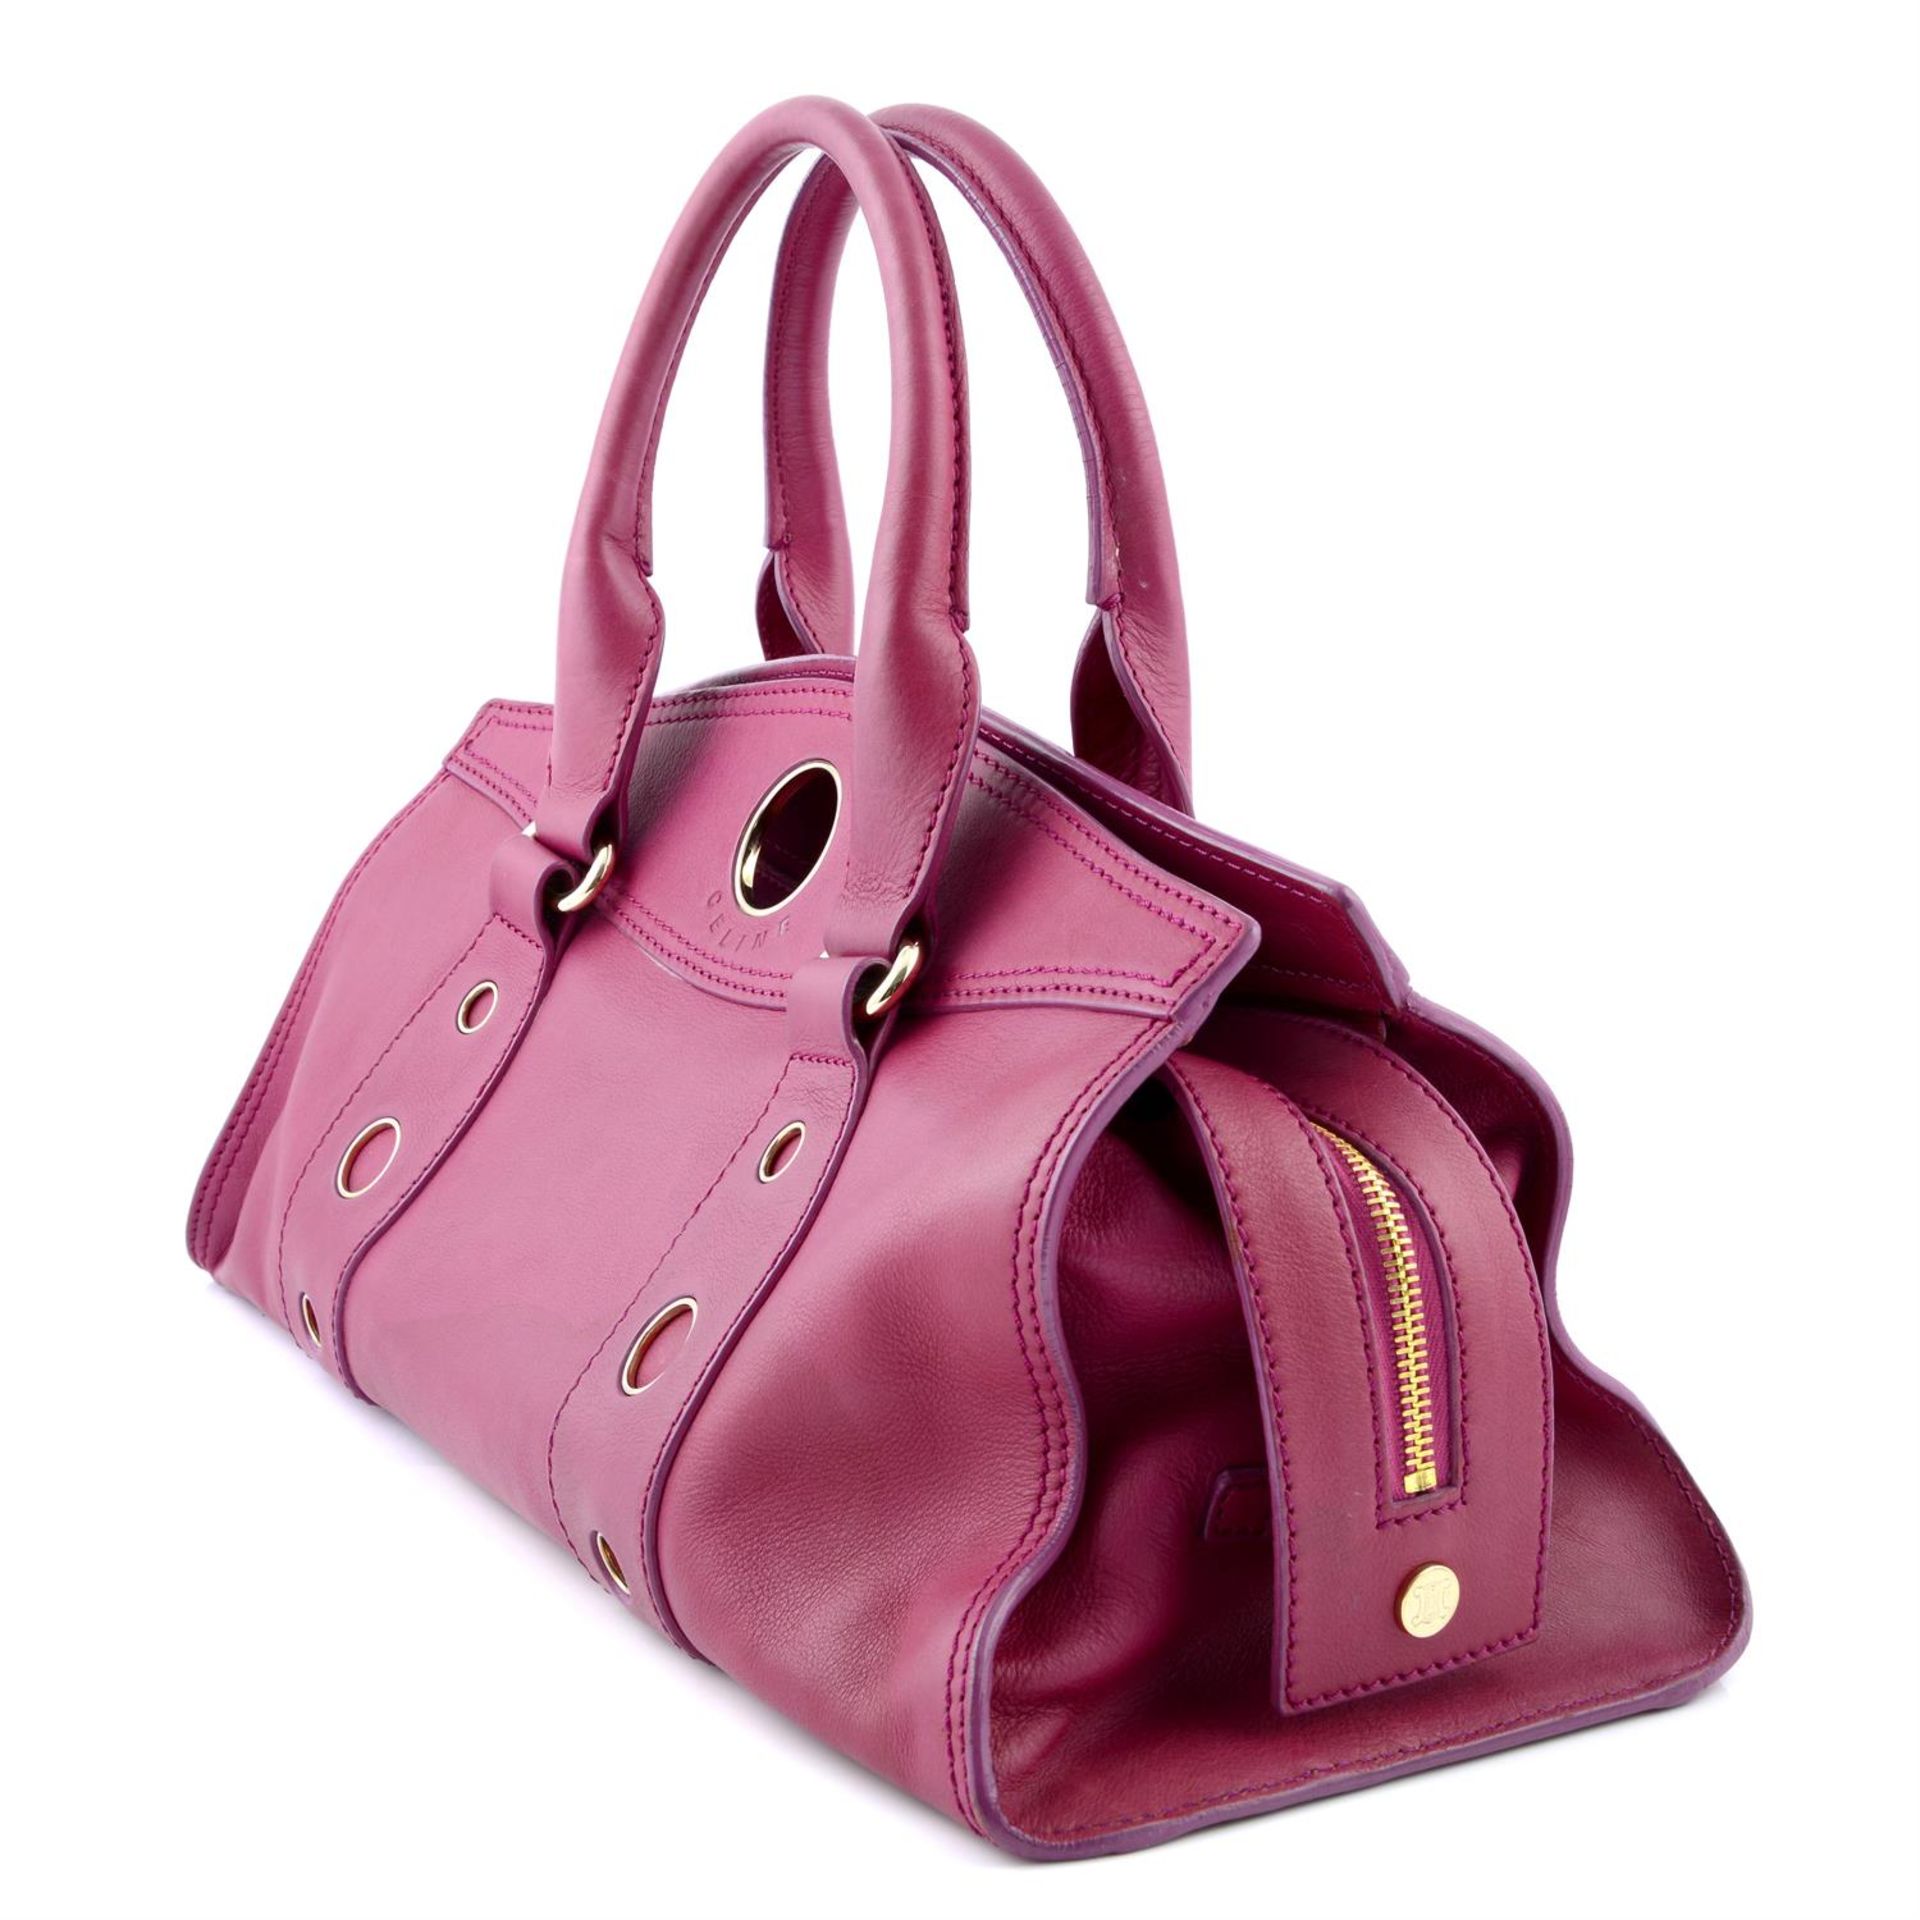 CÉLINE - a fuchsia leather handbag. - Image 3 of 5